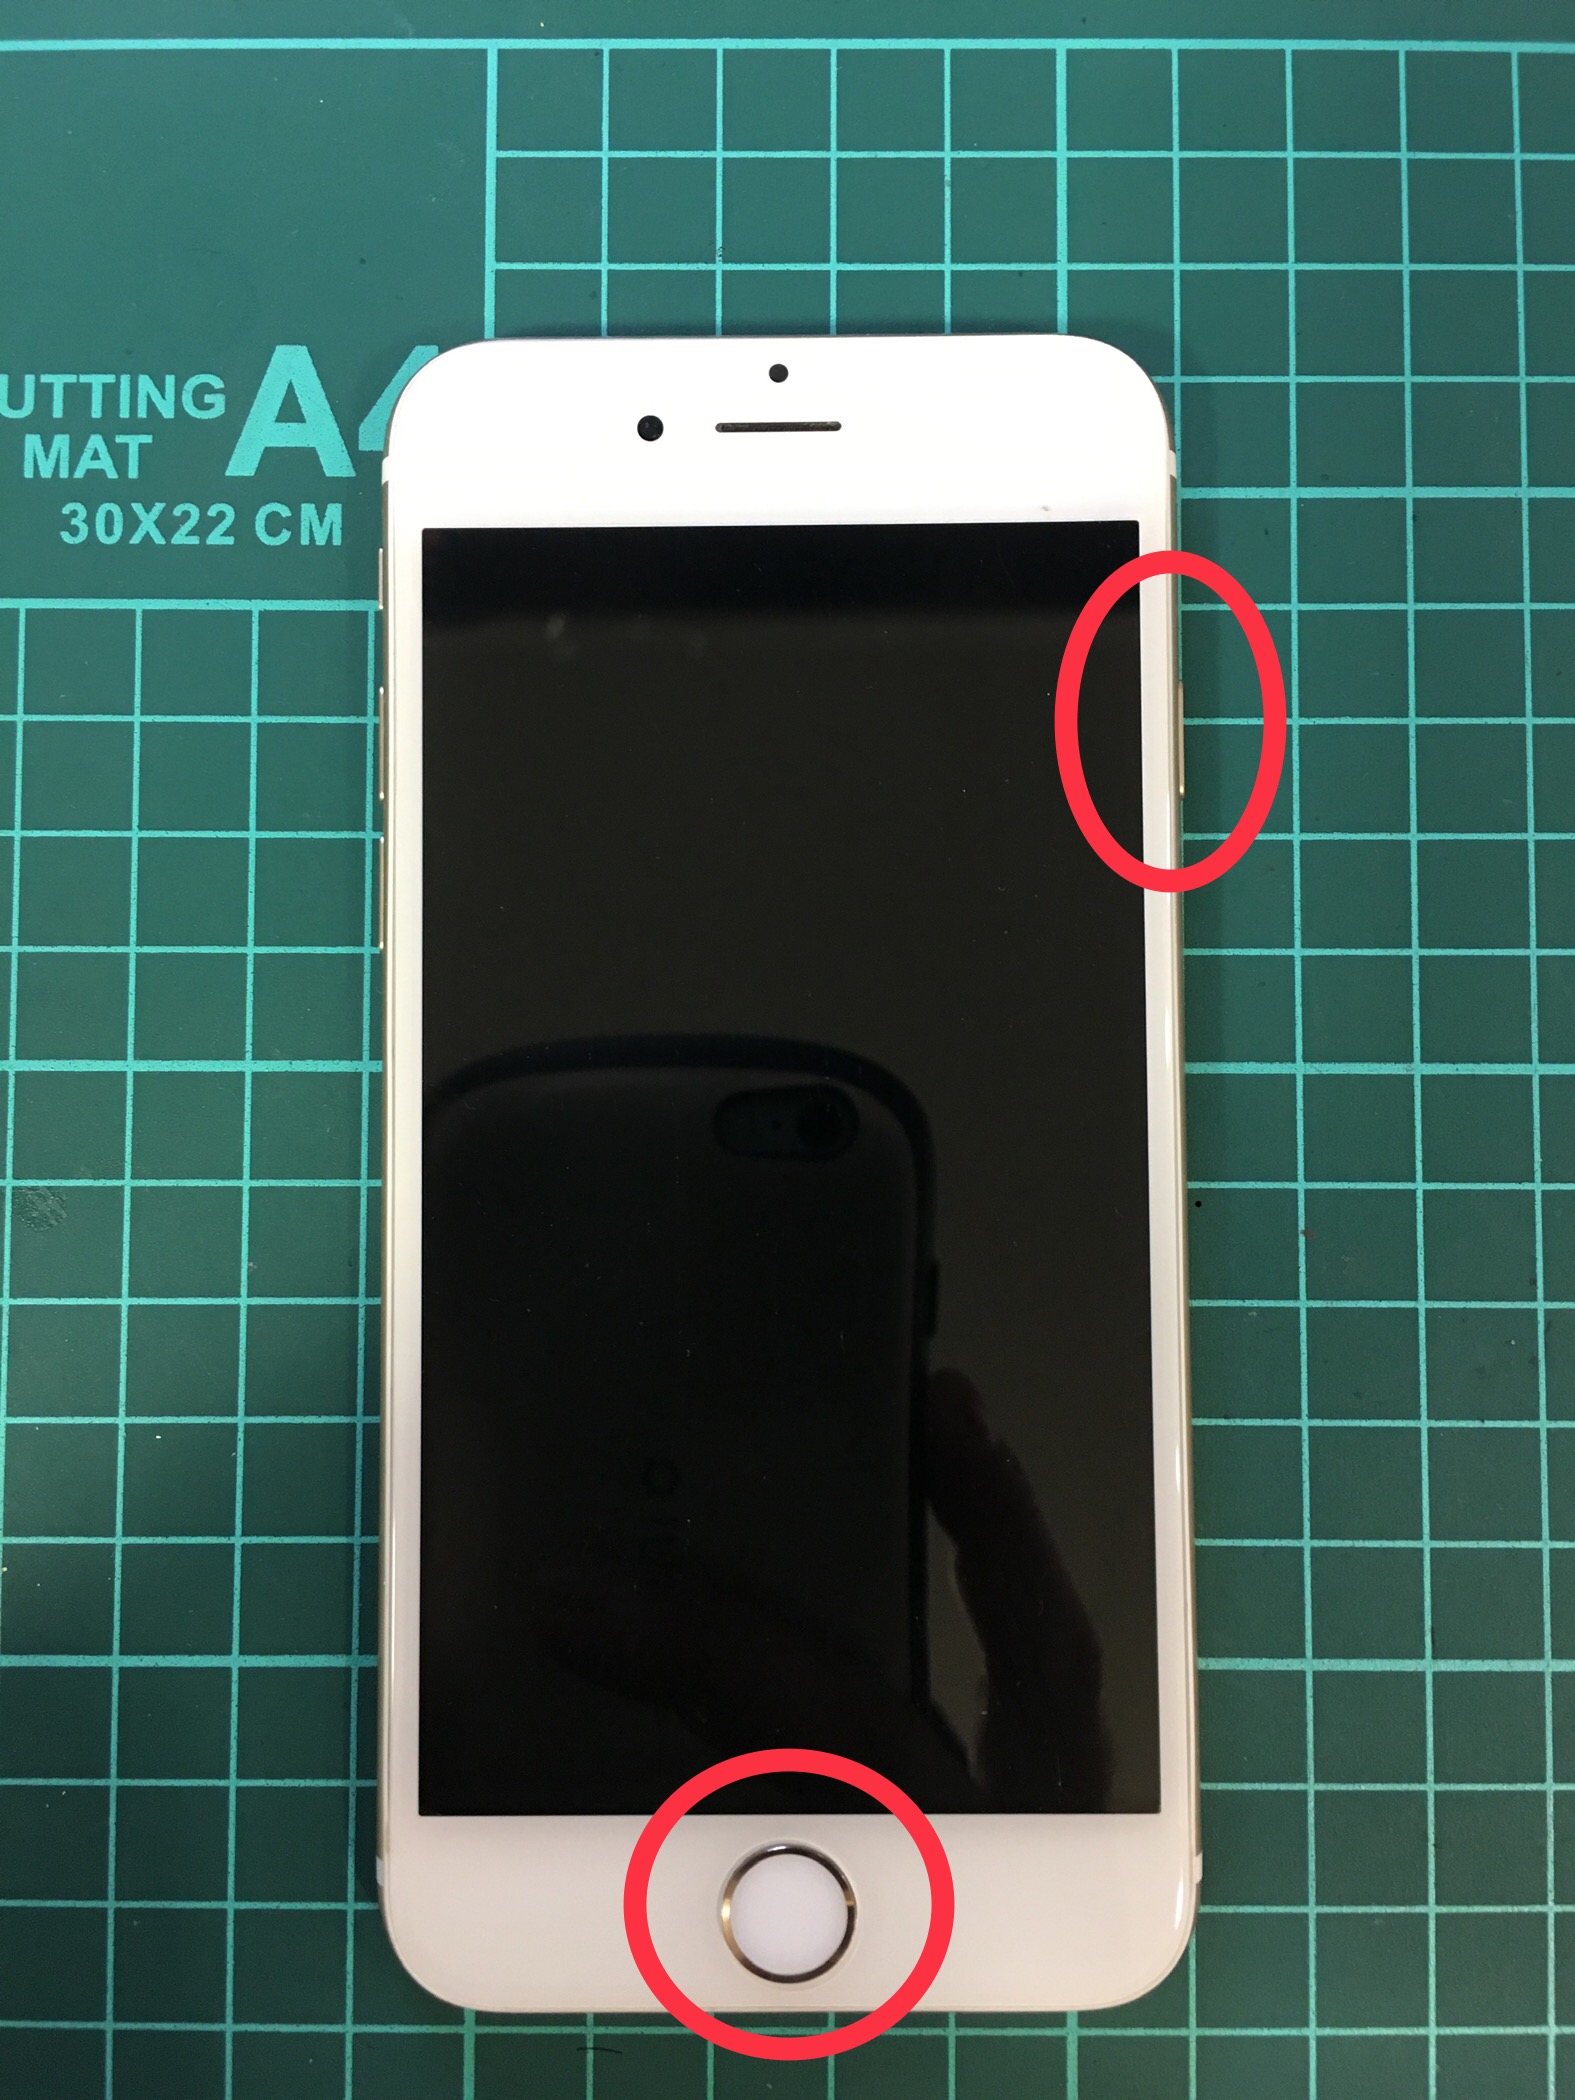 Iphone リカバリーモードとdfuモードのやり方 浜松 Iphone修理のアイプラス